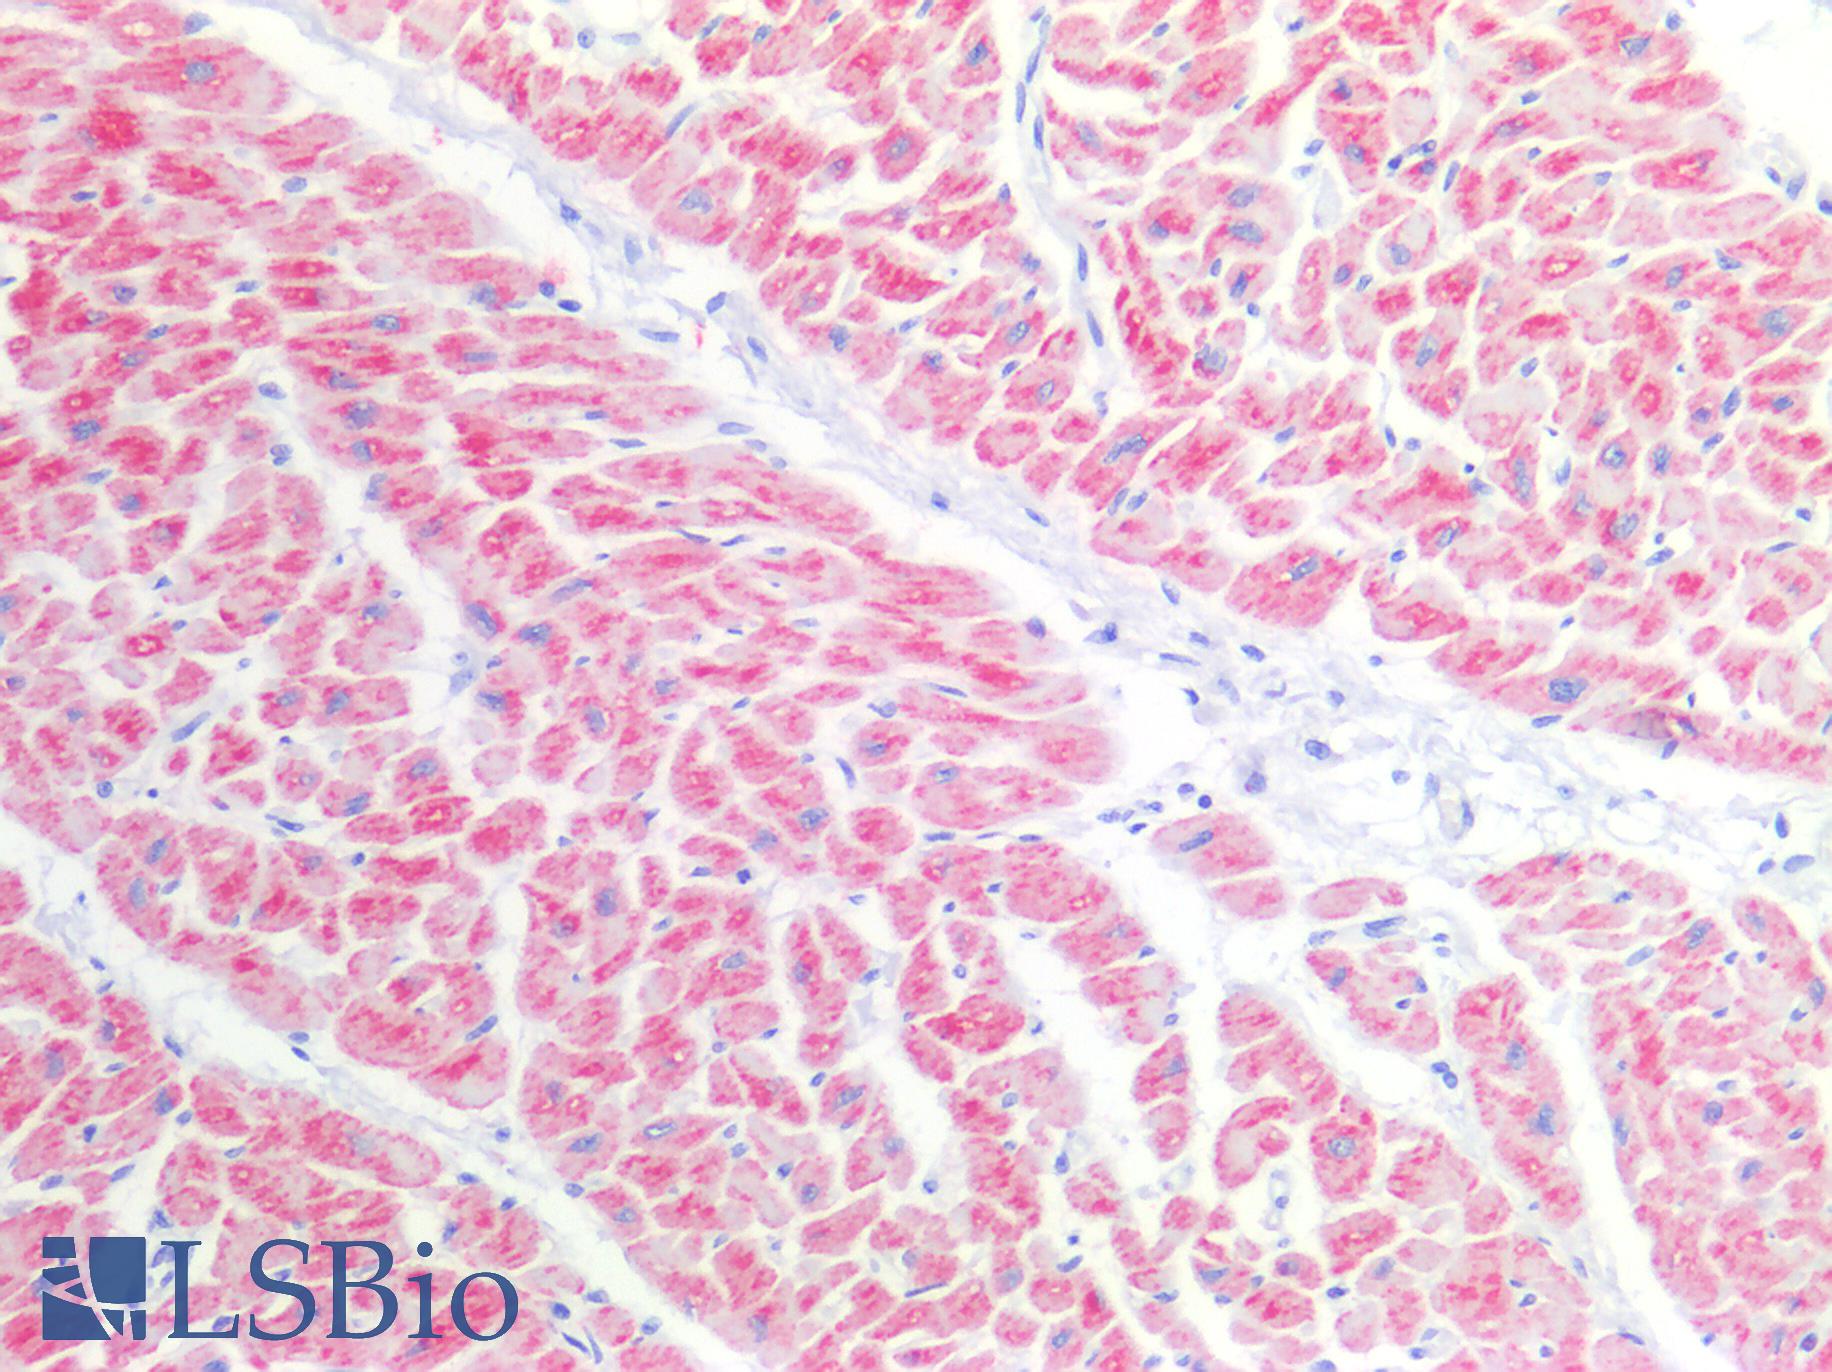 CD157 Antibody - Human Heart: Formalin-Fixed, Paraffin-Embedded (FFPE)